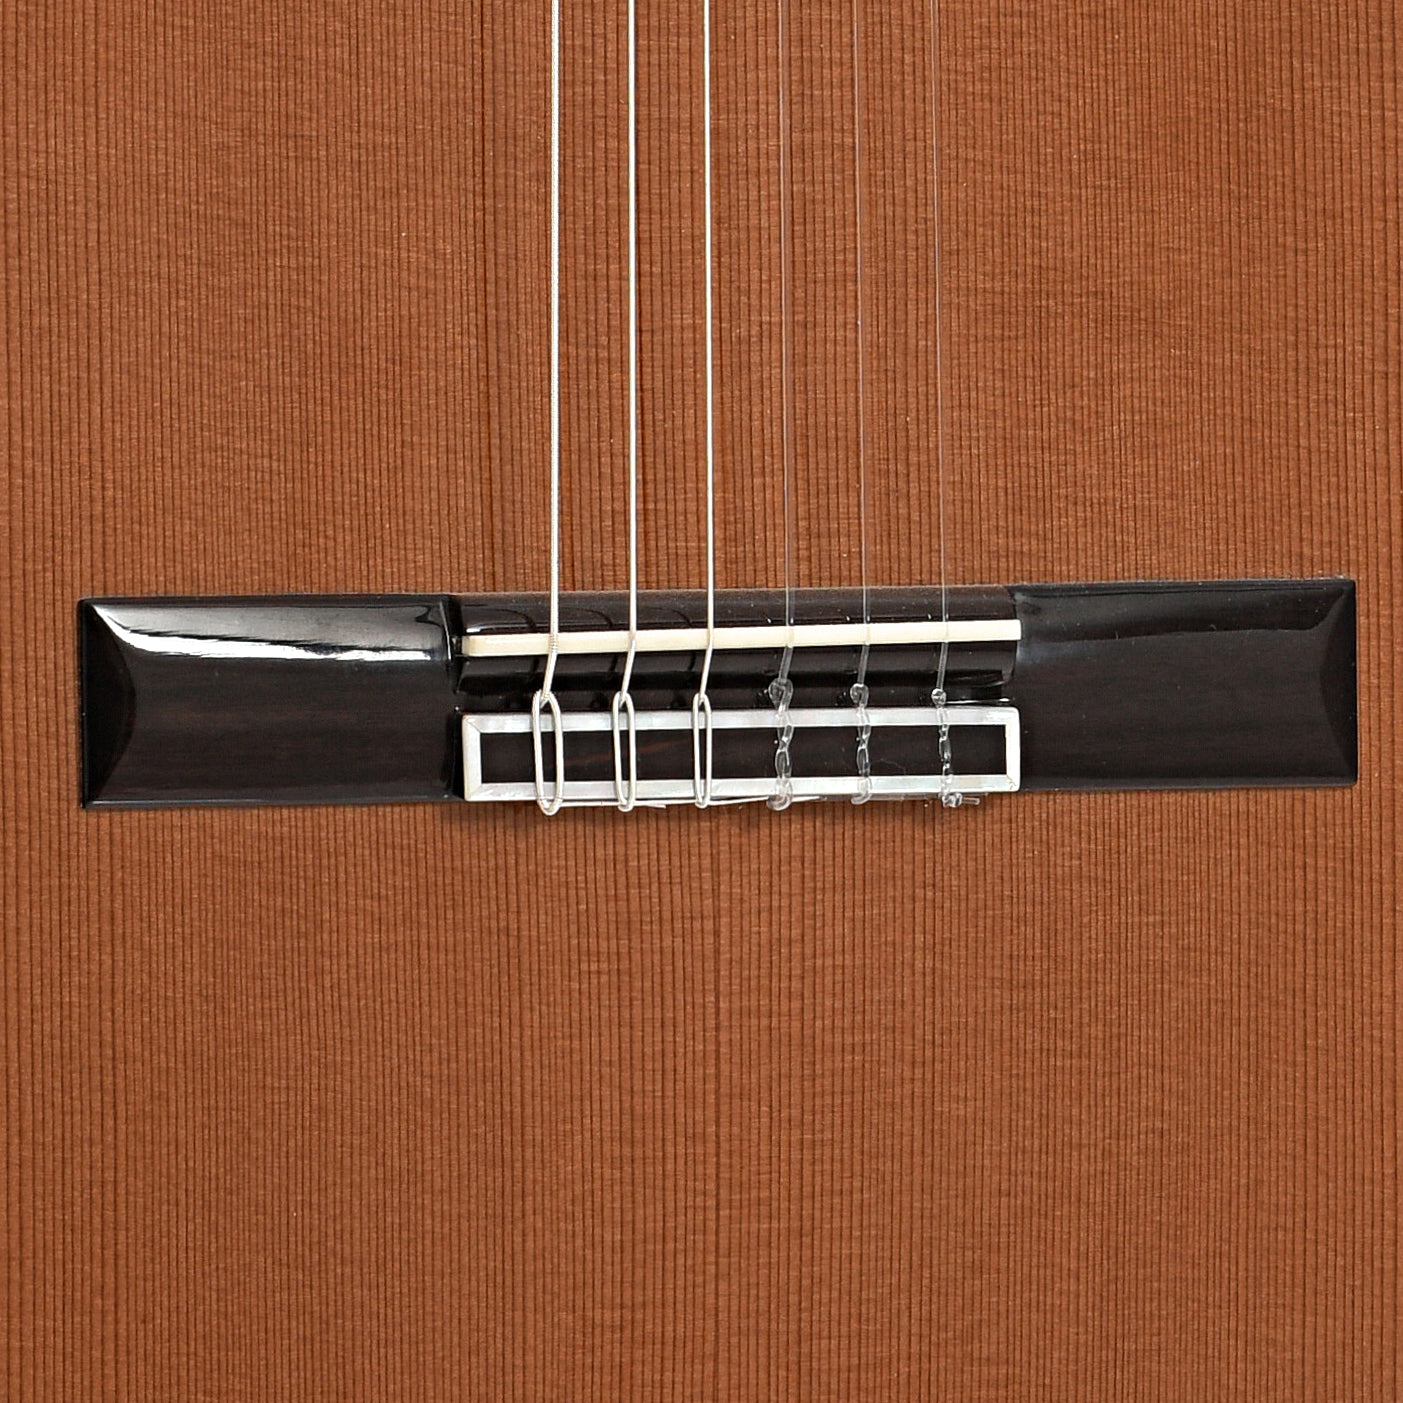 Bridge of Cordoba C12 CD Classical Guitar and Case, Cedar Top